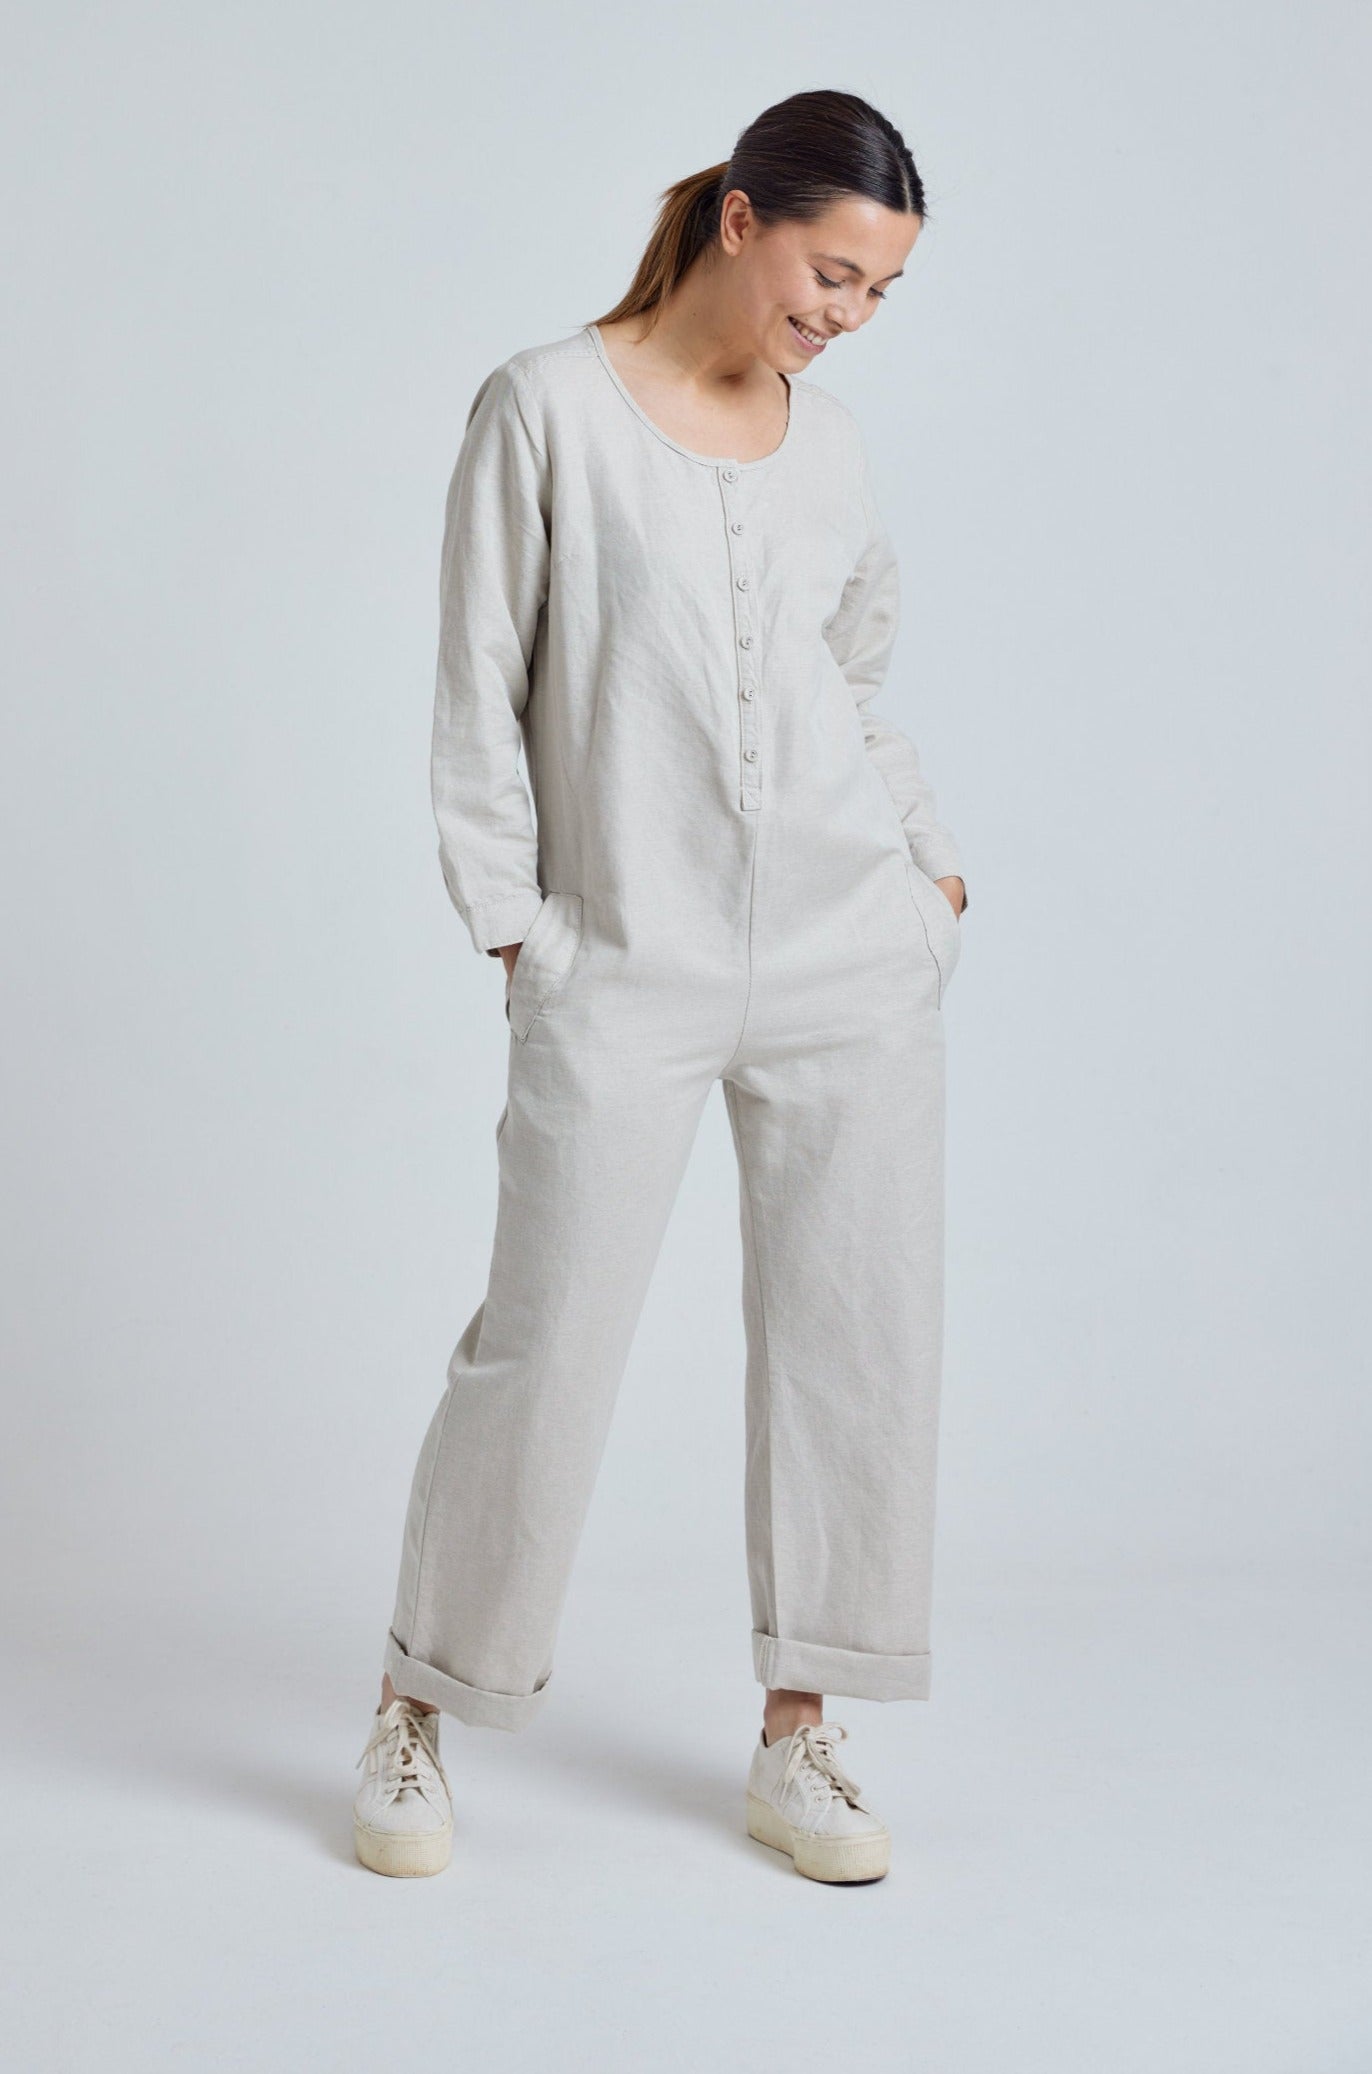 CLARA natural - GOTS Organic Cotton Jumpsuit by Flax & Loom, S